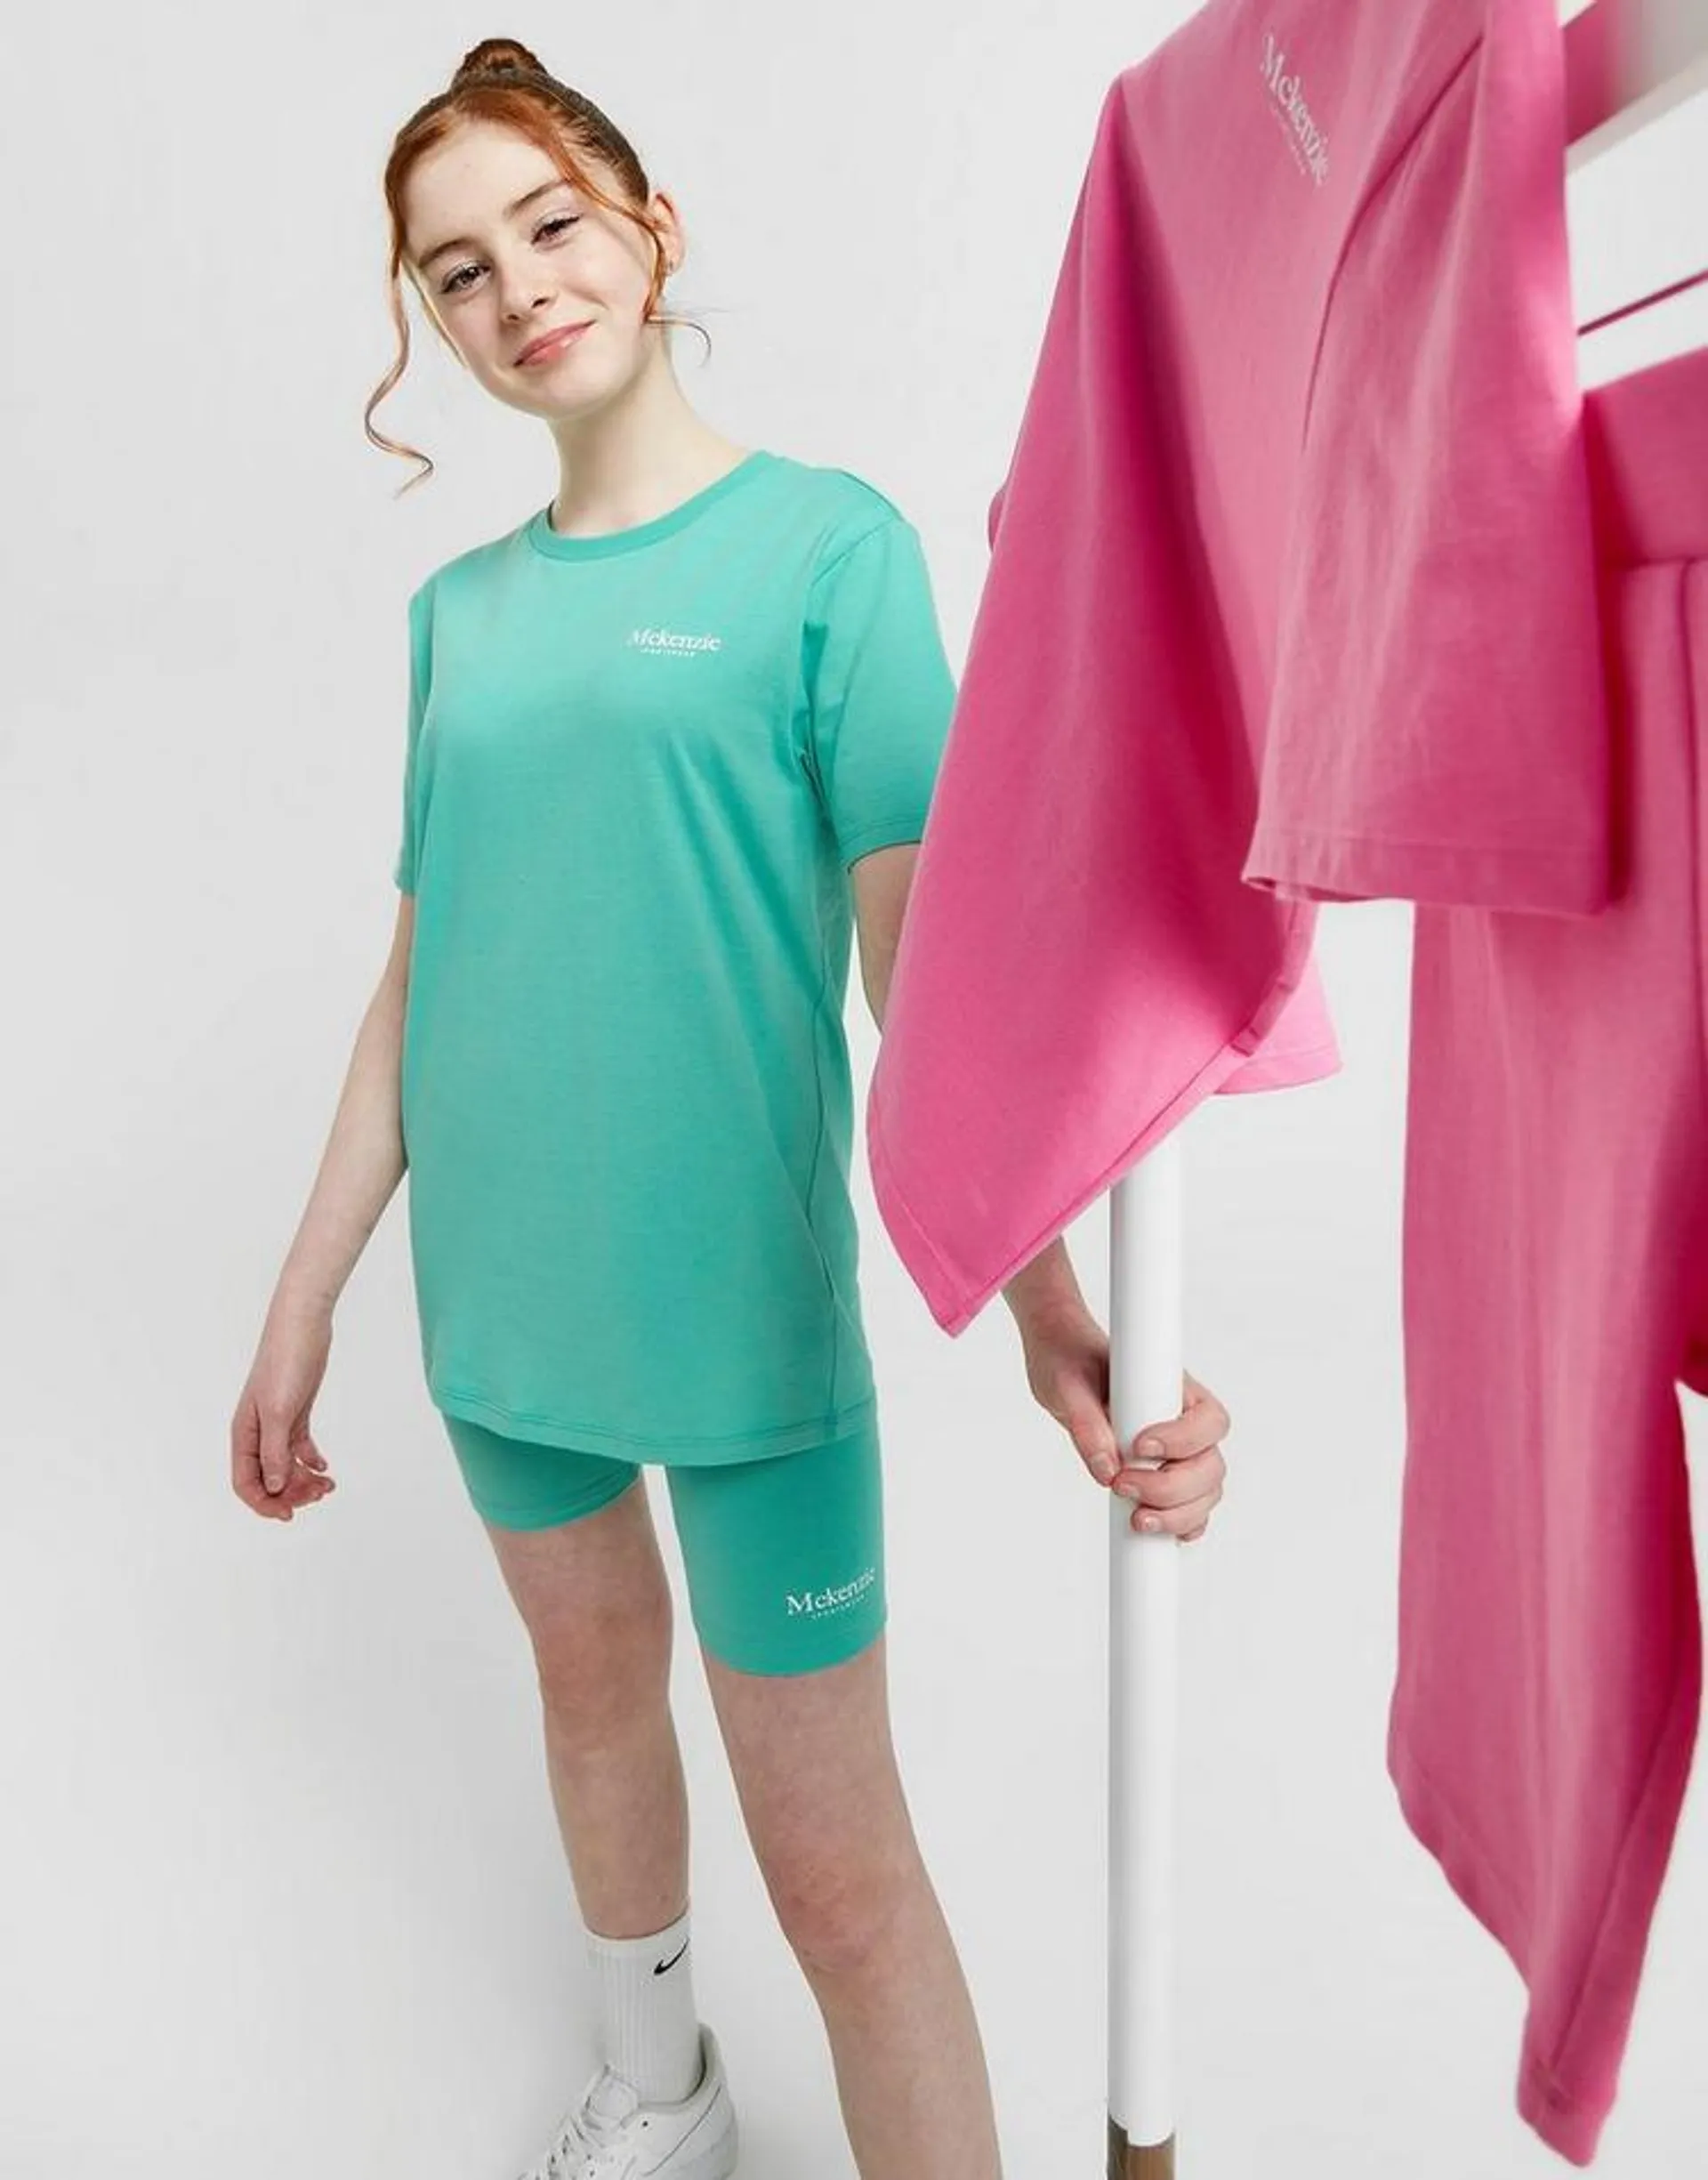 McKenzie Girls' Lilo T-Shirt/Cycle Shorts Set Junior